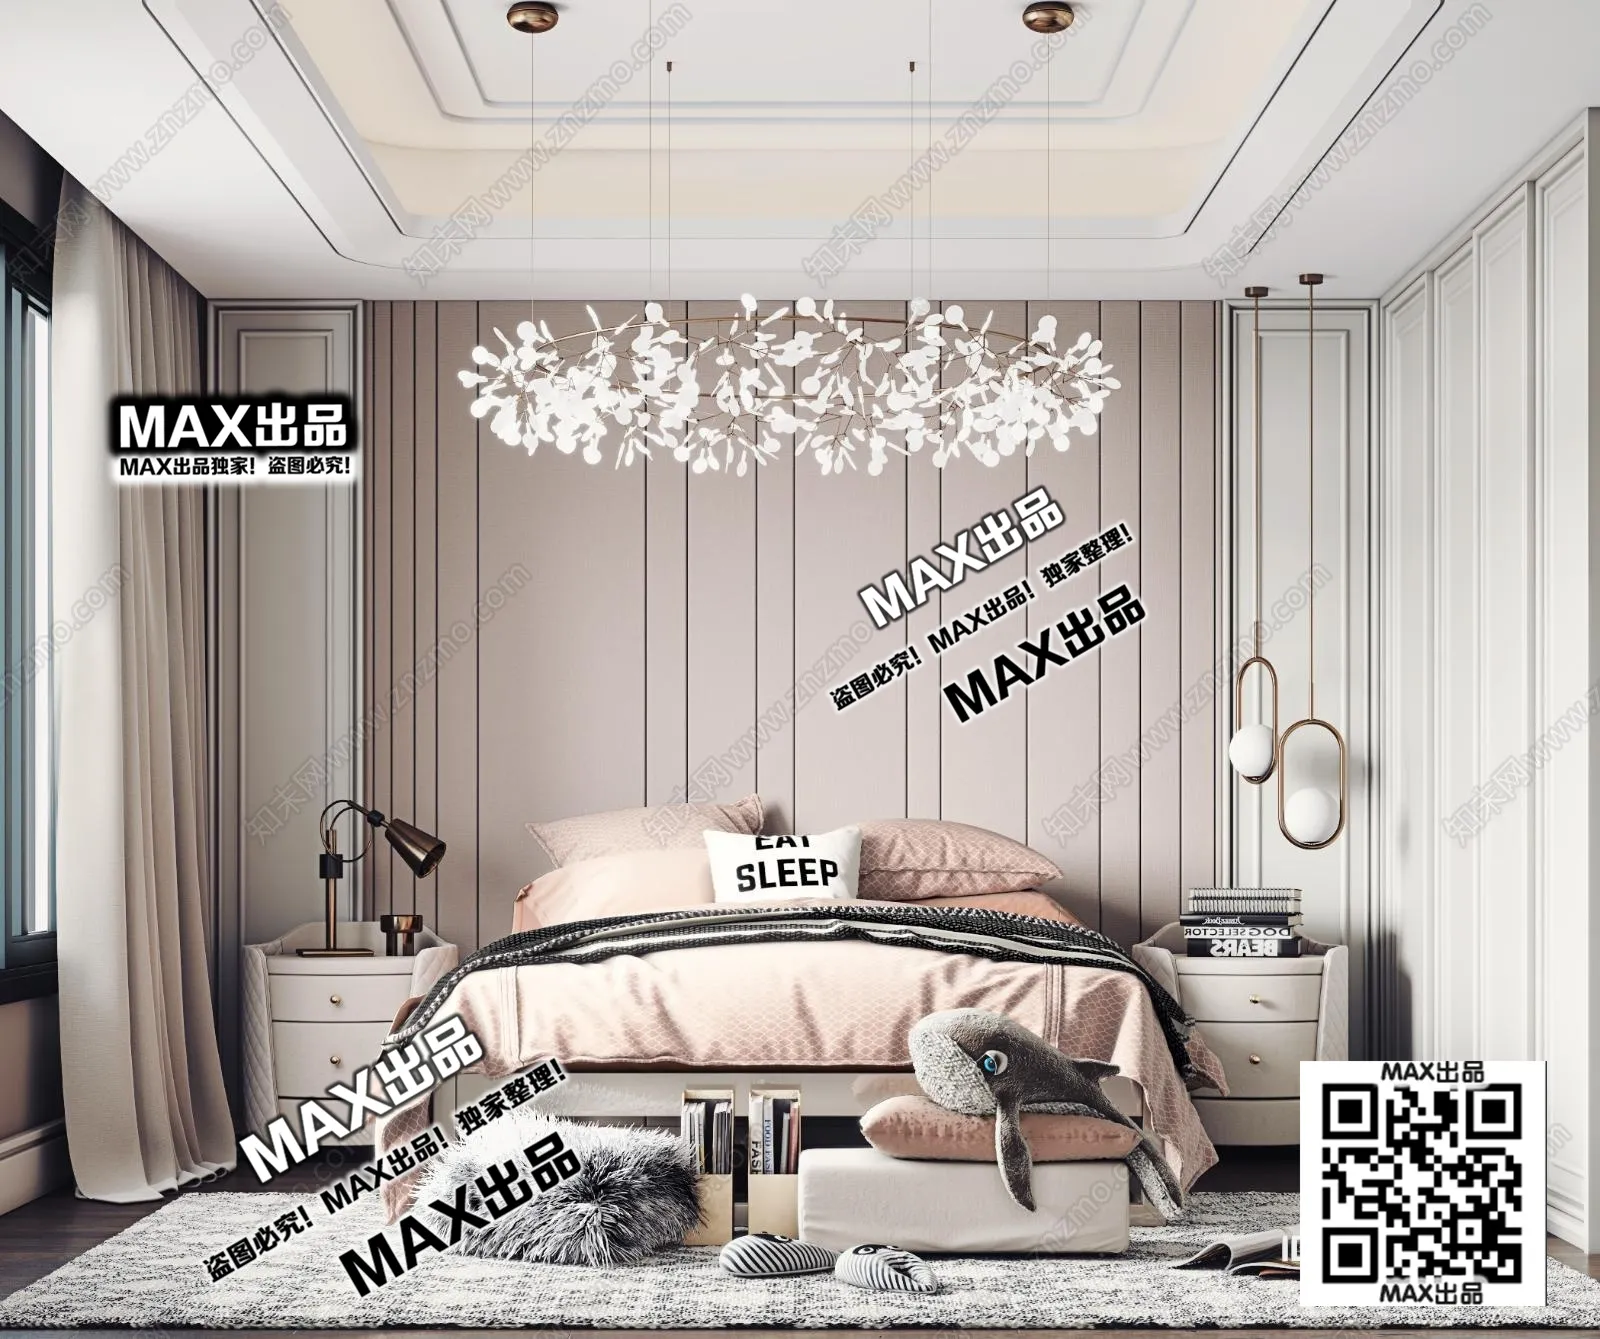 3DS MAX SCENES – LIVING ROOM – 339